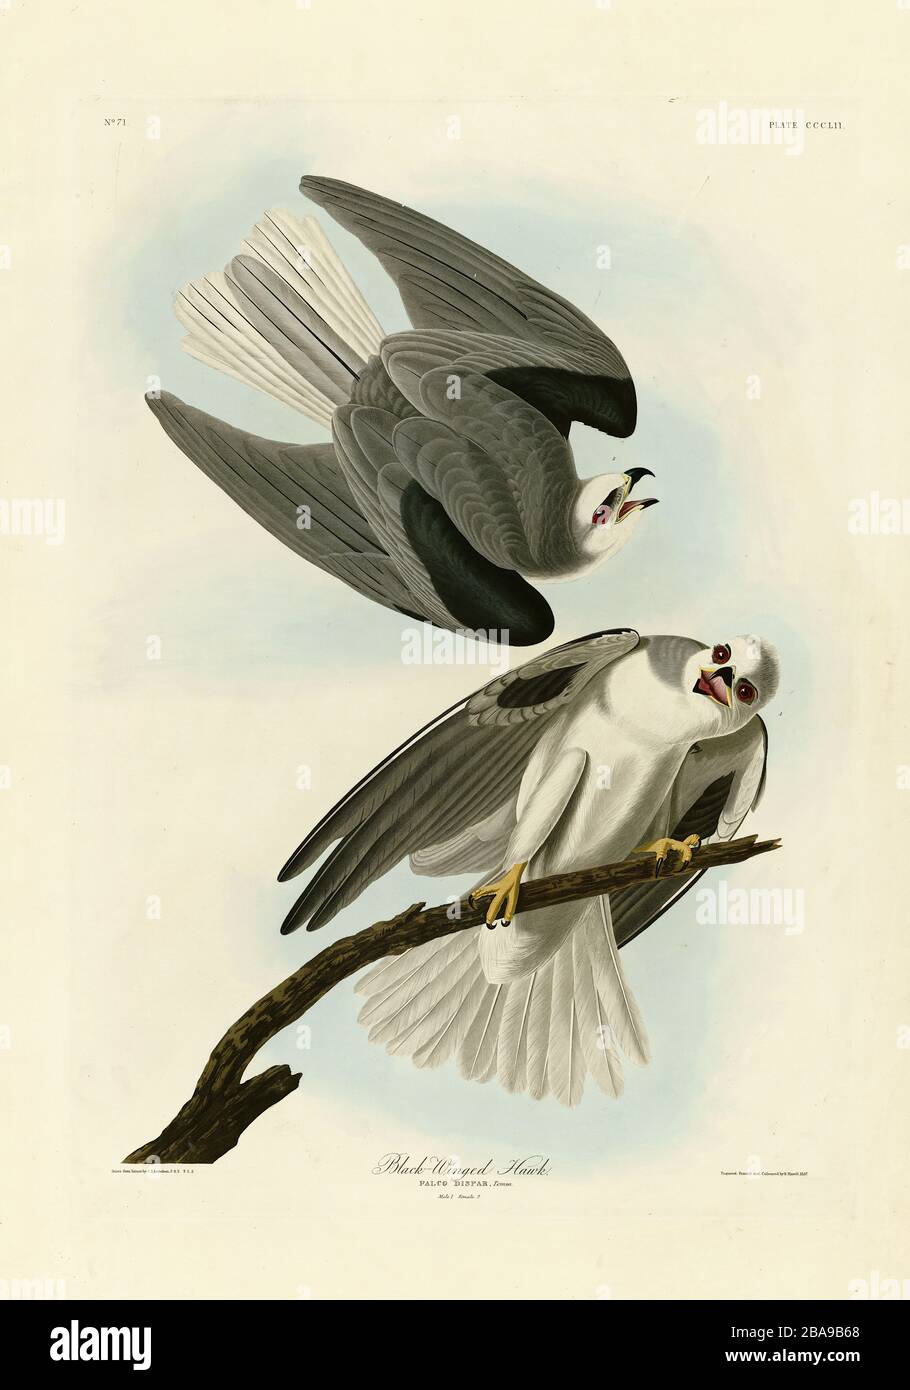 Plate 352 Black-Winged Hawk (White-tailed Kite) The Birds of America Folio (1822-18316) John James Audubon, sehr hochauflösendes, qualitativ hochwertiges Bild Stockfoto